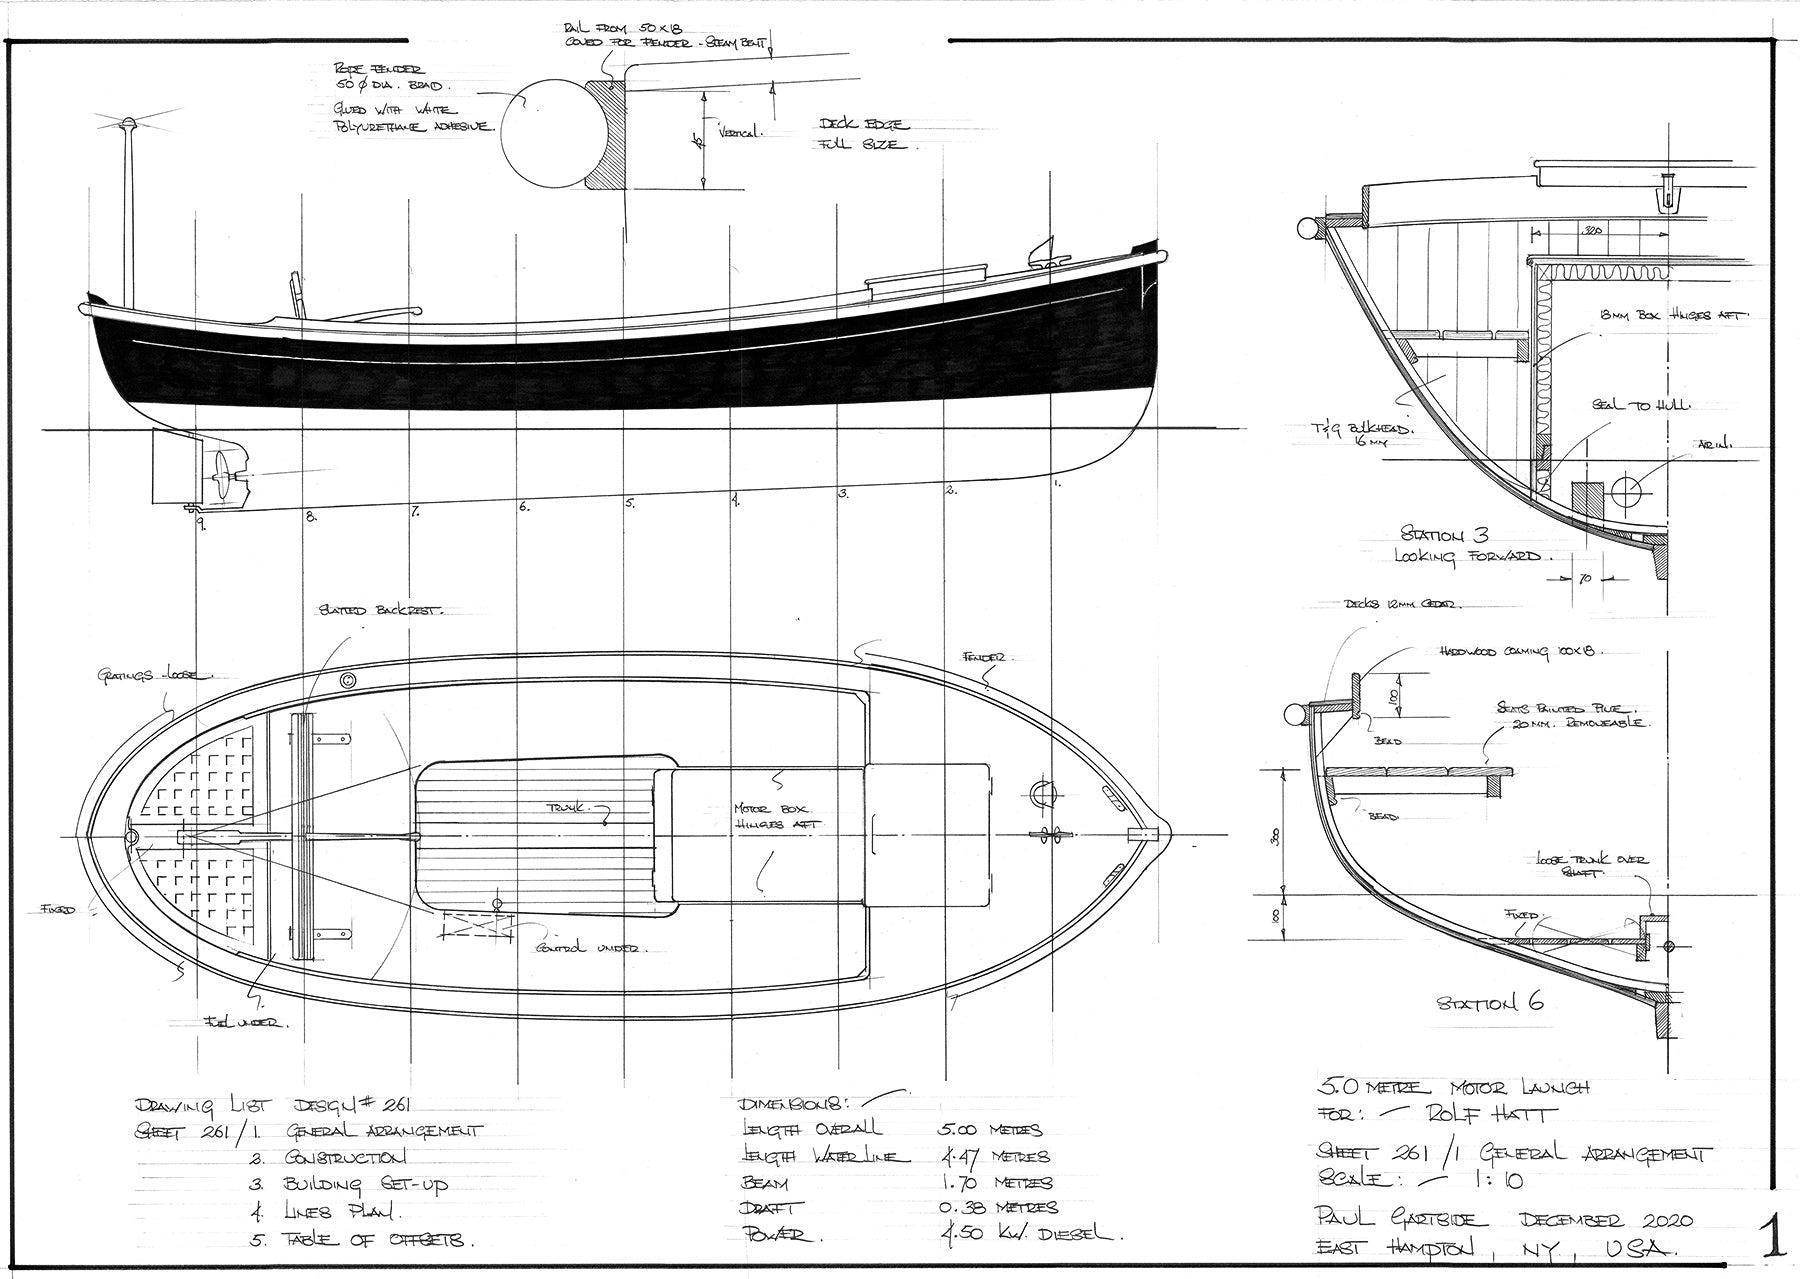 Gartside Boats  5.0 Metre Motor Launch Design #261